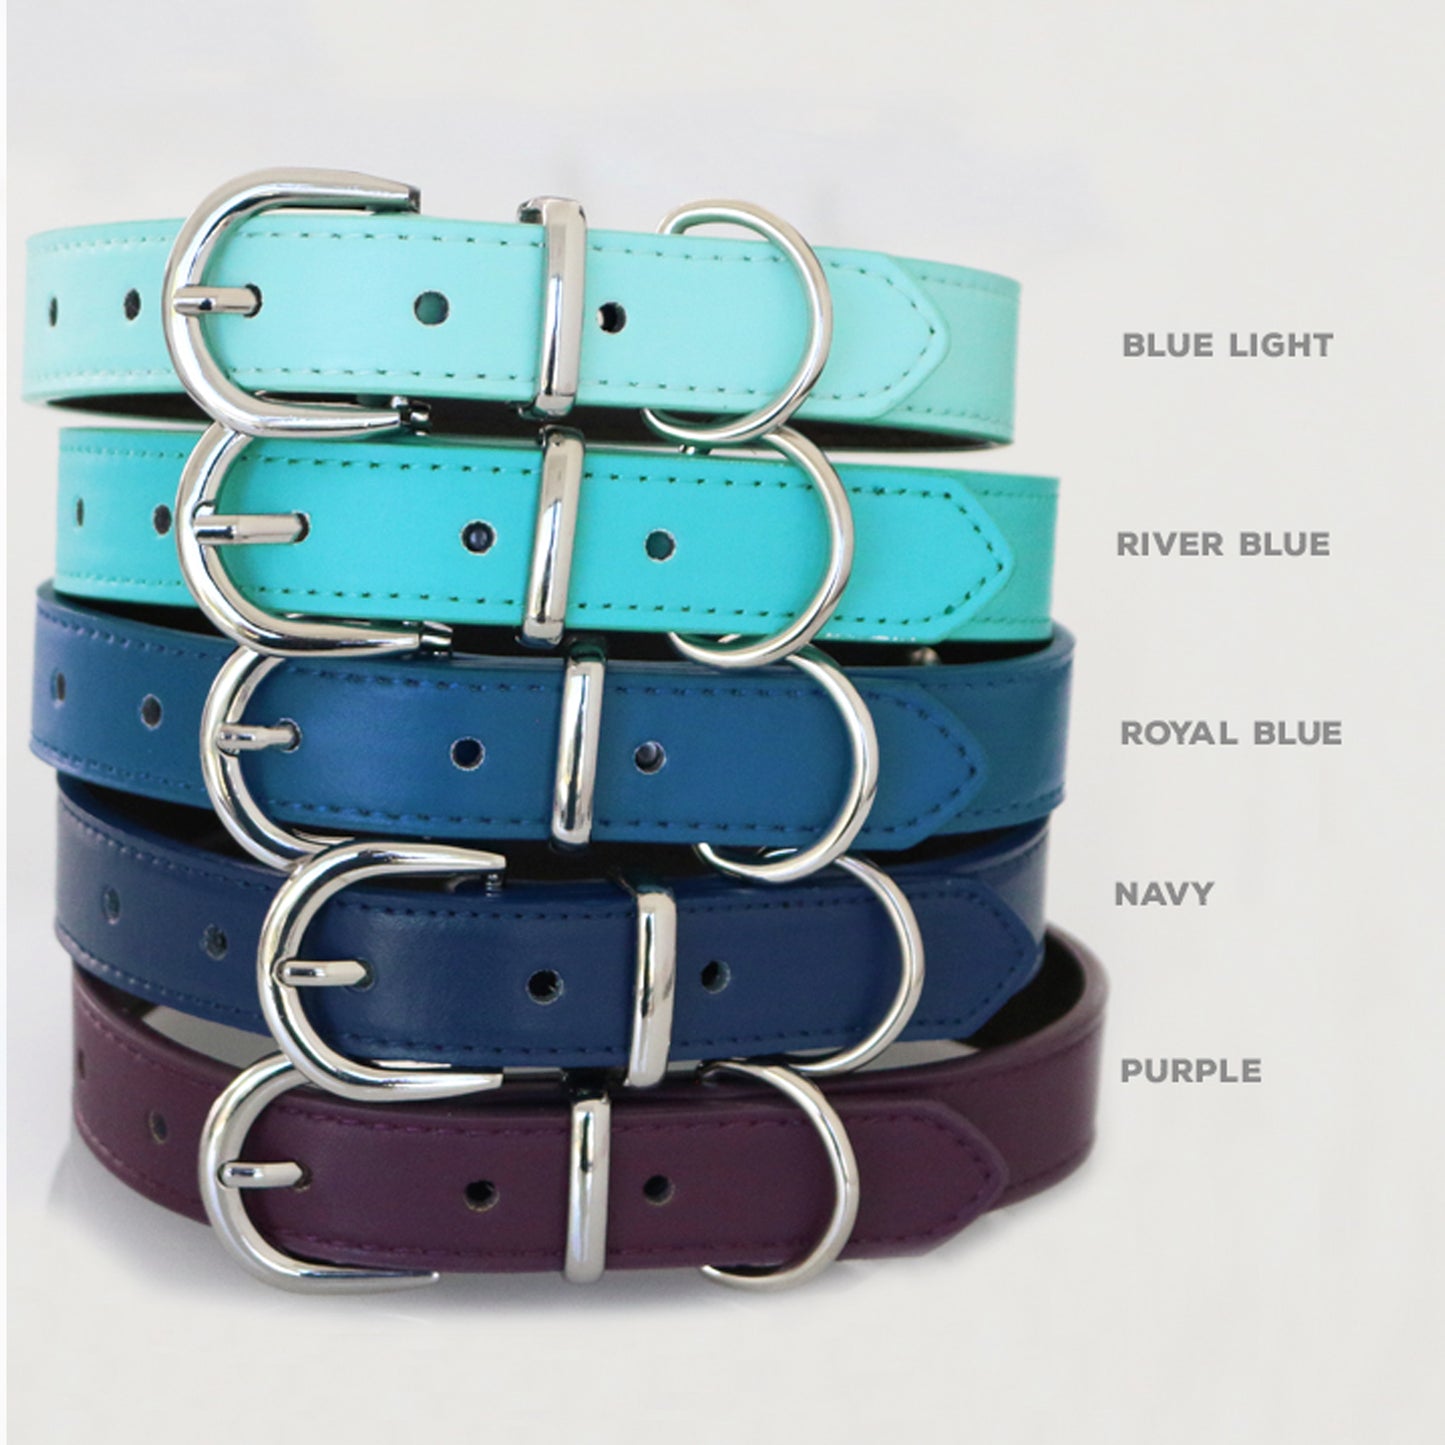 Purple polka dots lace Bow tie collar, Girl dog collar, M to XXL collar, Lilac white gray leather collar , Wedding dog collar